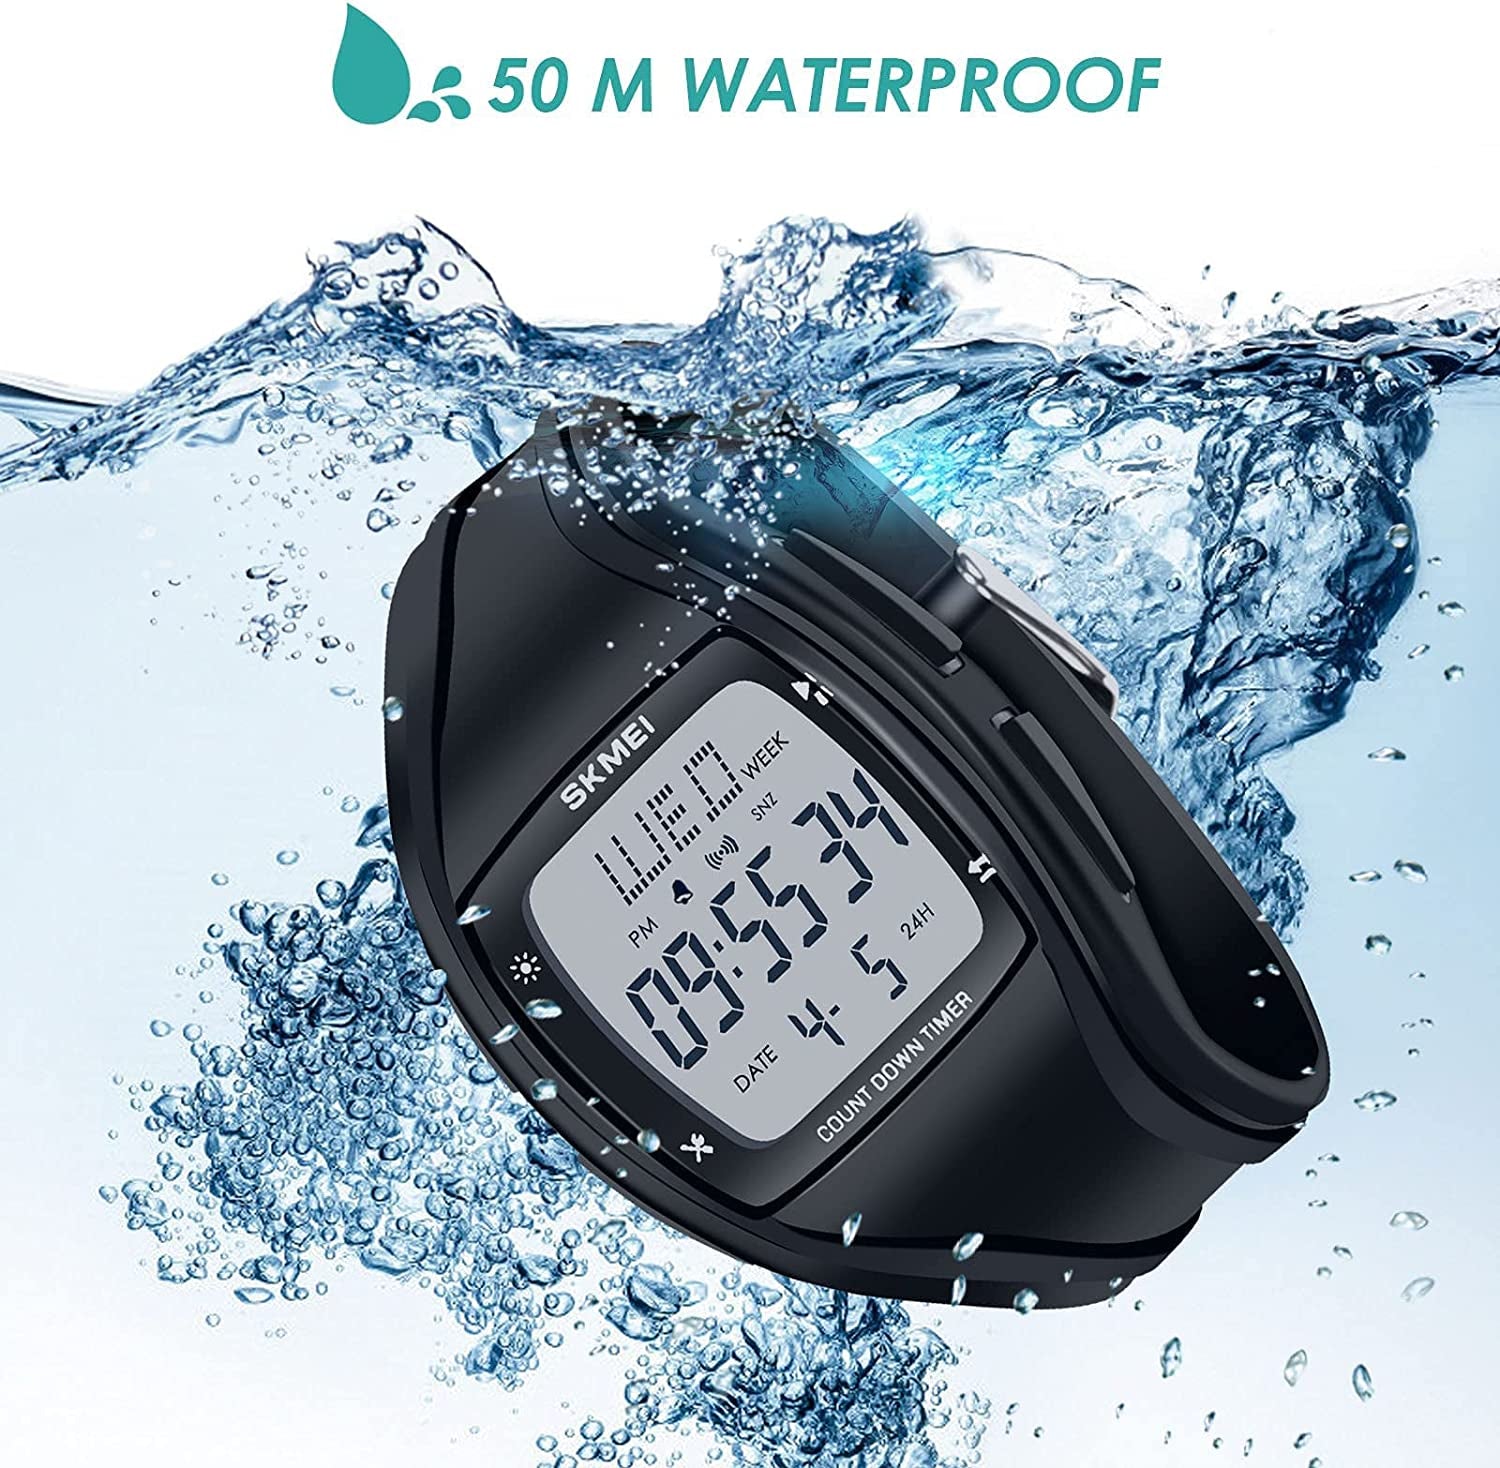 Mens Digital Sport Watches for Men Wrist Watches for Men with Alarm Stopwatch Waterproof